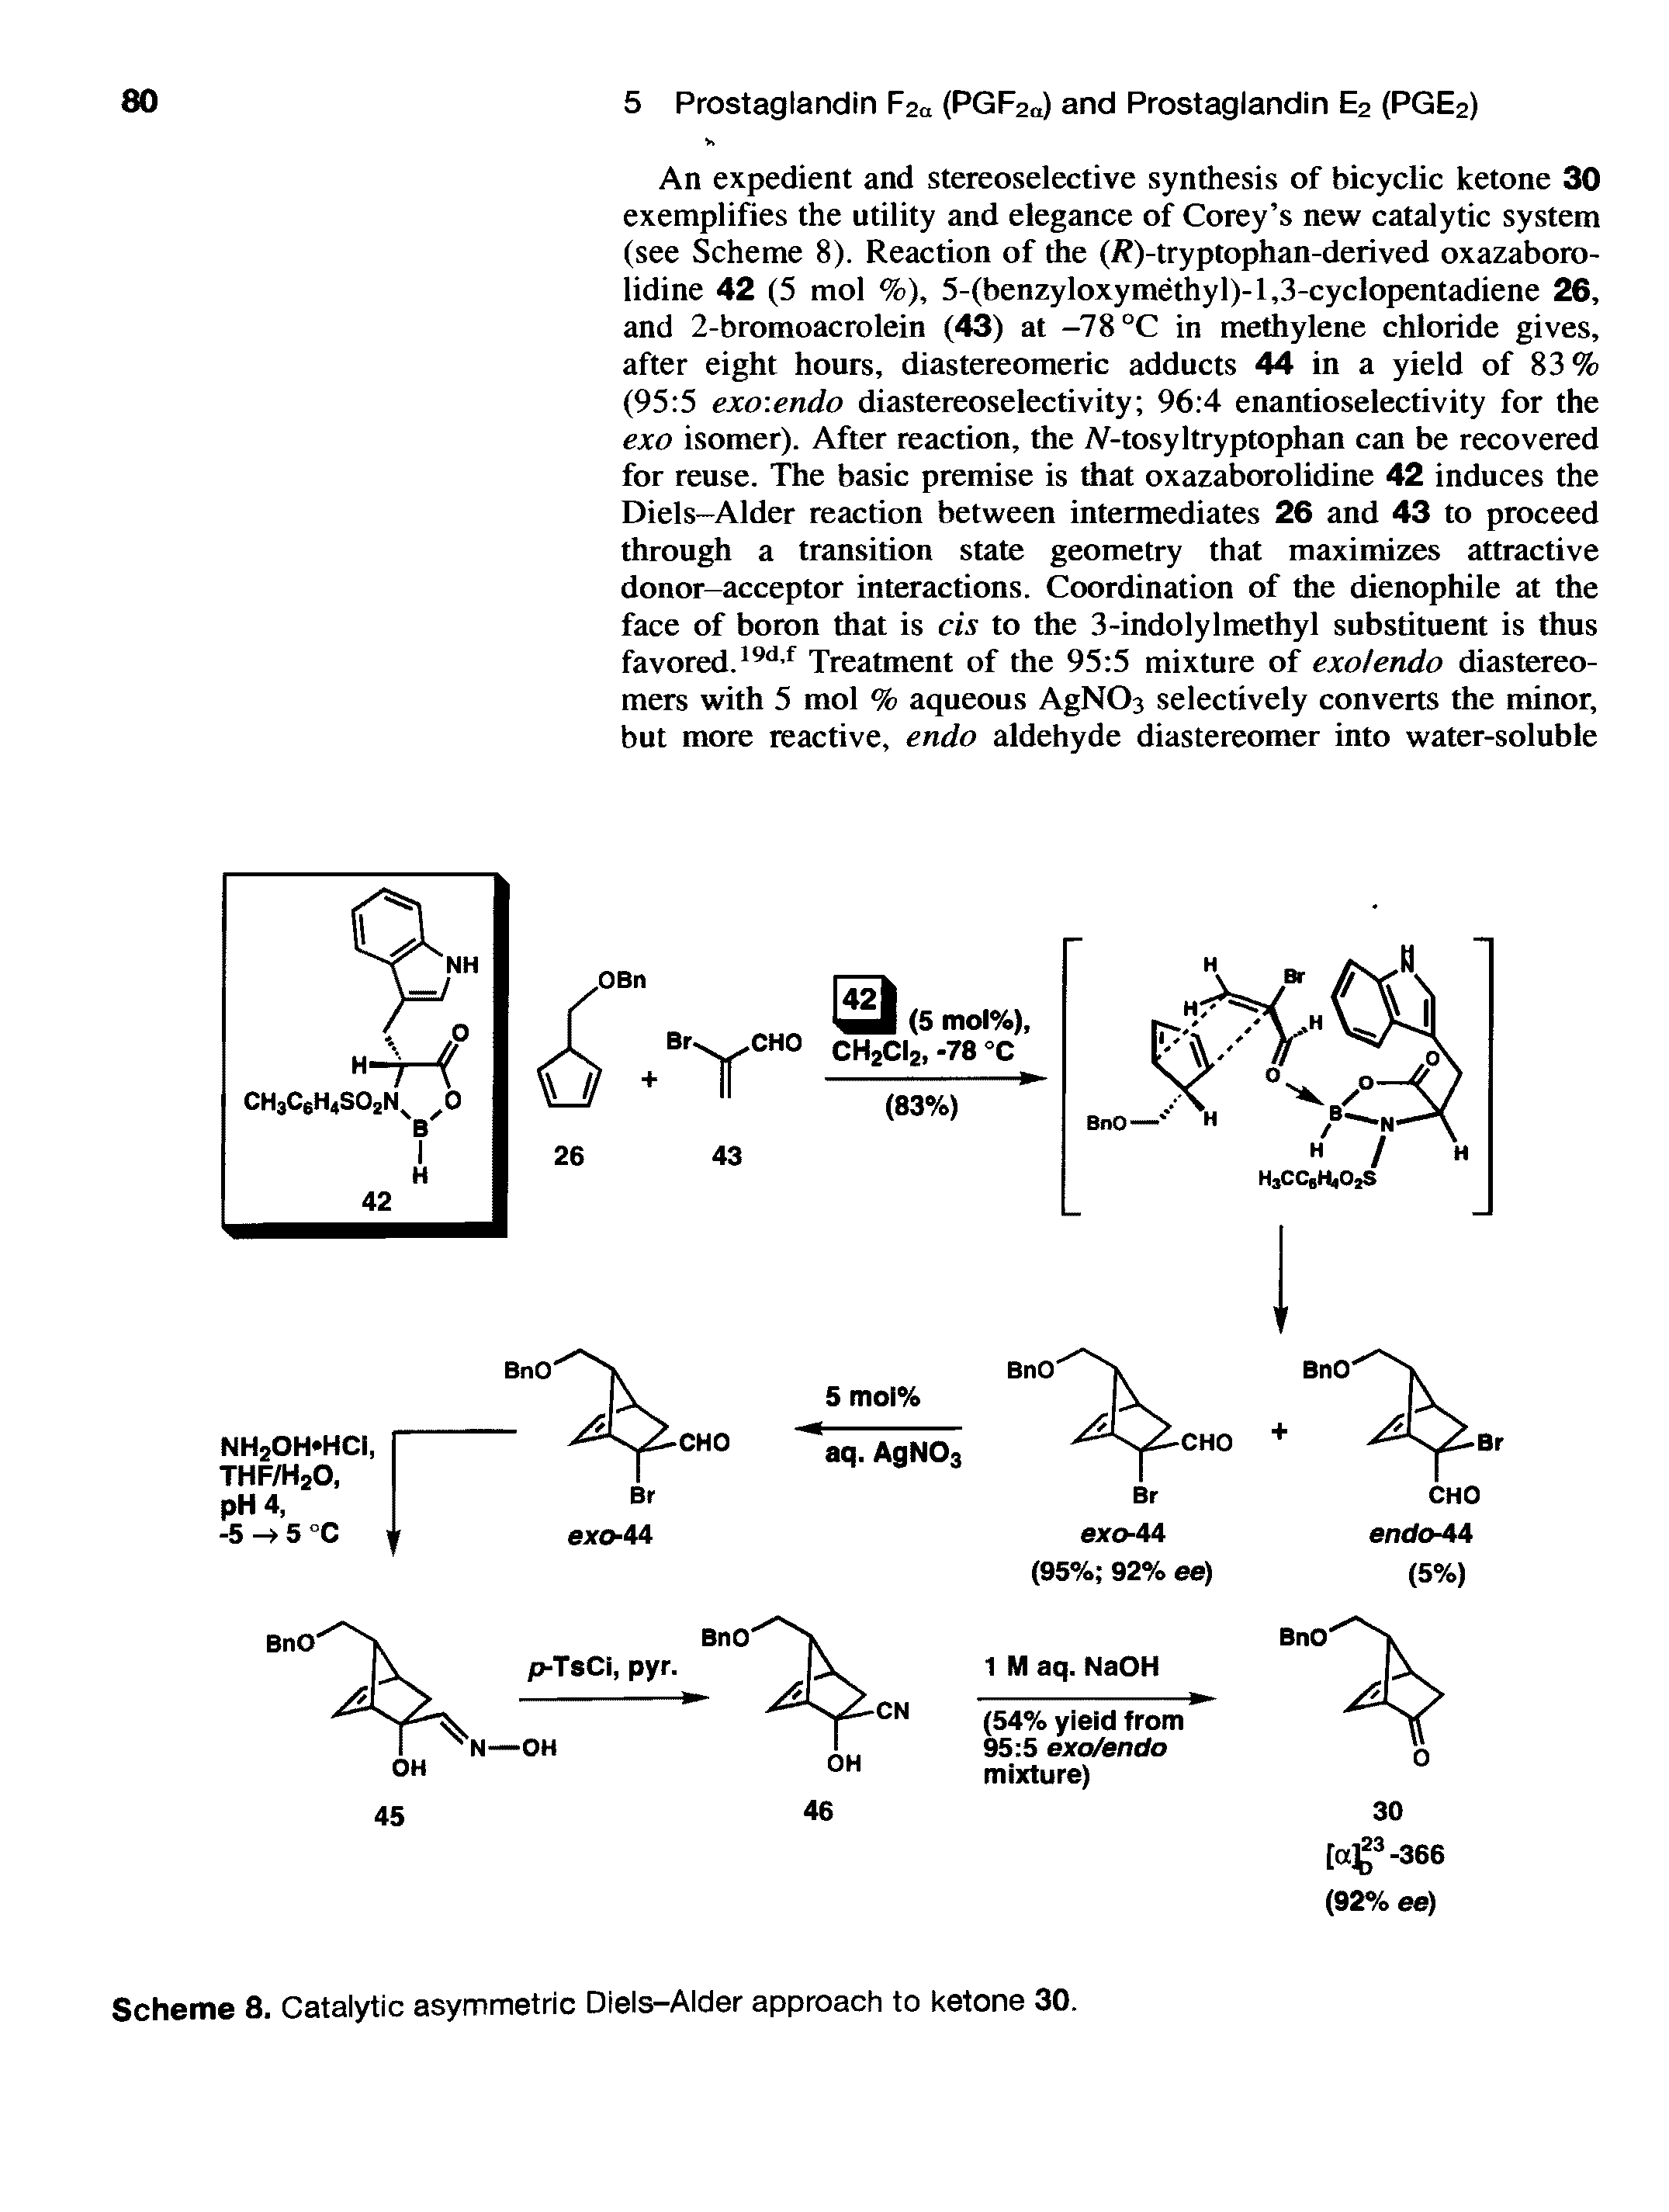 Scheme 8. Catalytic asymmetric Diels-Alder approach to ketone 30.